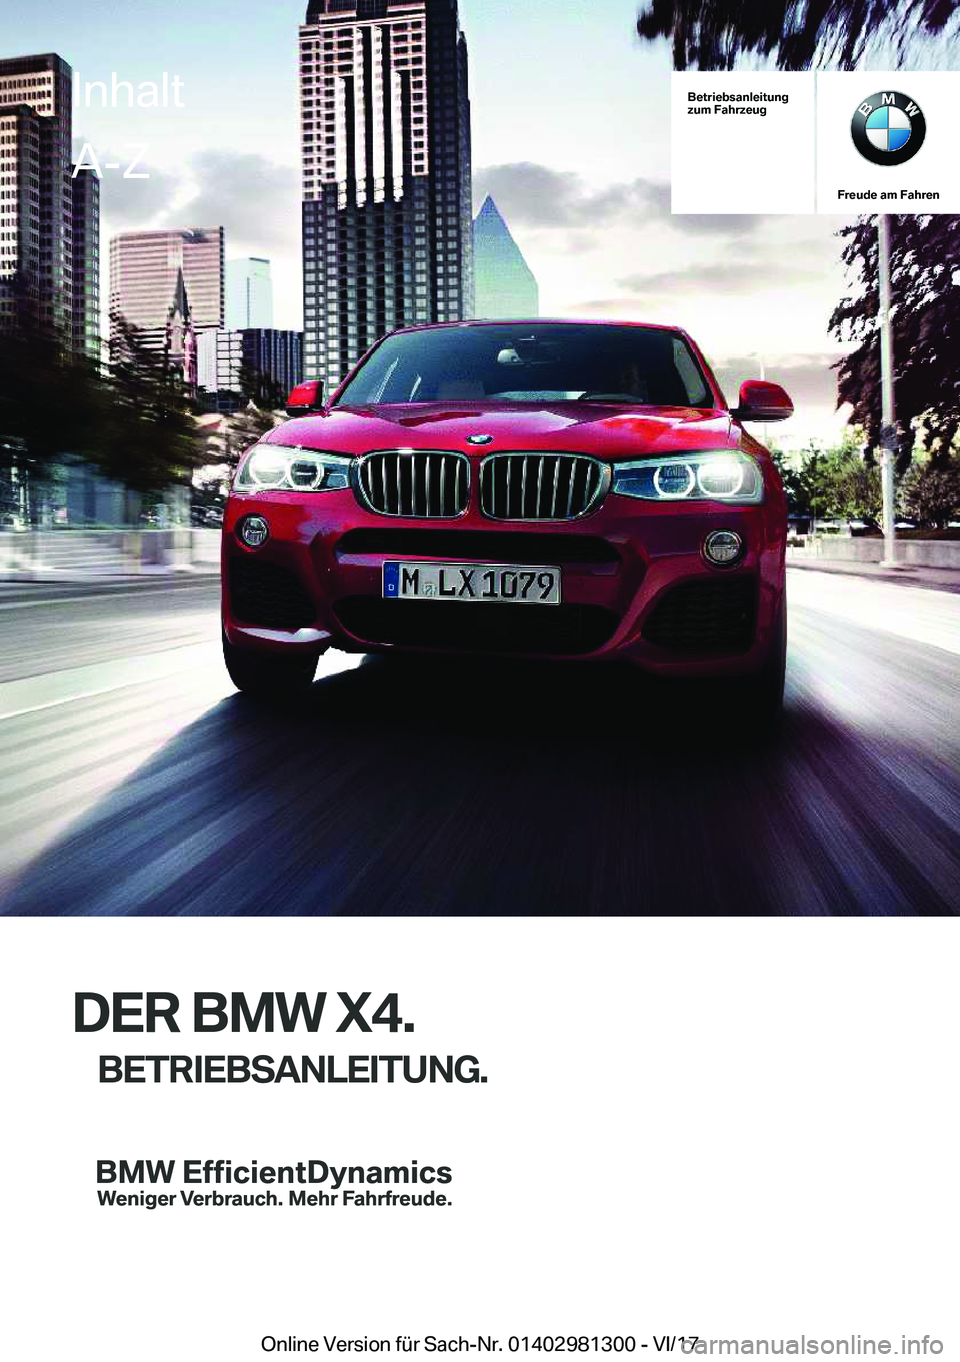 BMW X4 2018  Betriebsanleitungen (in German) �B�e�t�r�i�e�b�s�a�n�l�e�i�t�u�n�g
�z�u�m��F�a�h�r�z�e�u�g
�F�r�e�u�d�e��a�m��F�a�h�r�e�n
�D�E�R��B�M�W��X�4�.
�B�E�T�R�I�E�B�S�A�N�L�E�I�T�U�N�G�.
�I�n�h�a�l�t�A�-�Z
�O�n�l�i�n�e� �V�e�r�s�i�o�n